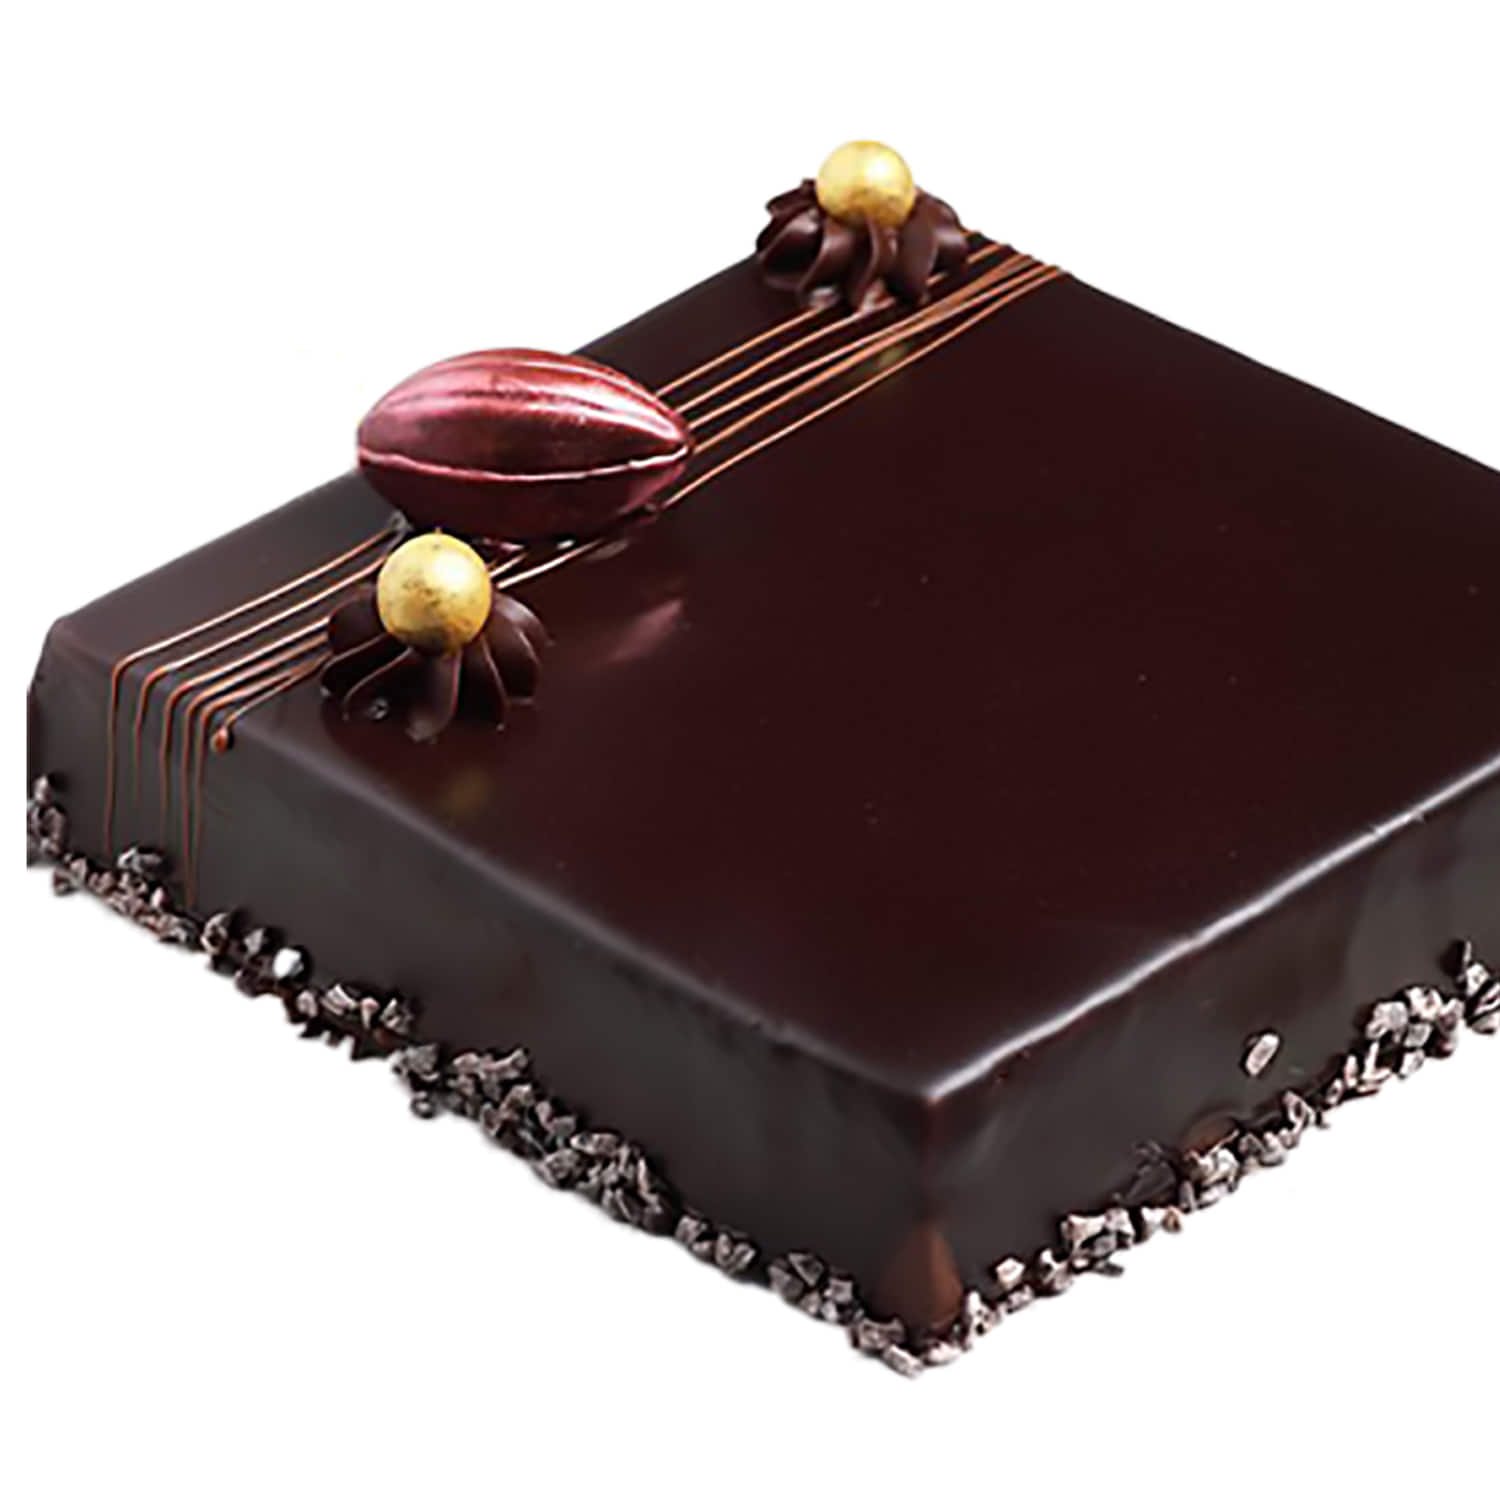 Chocolate Cake with Chocolate Cream Cheese Icing